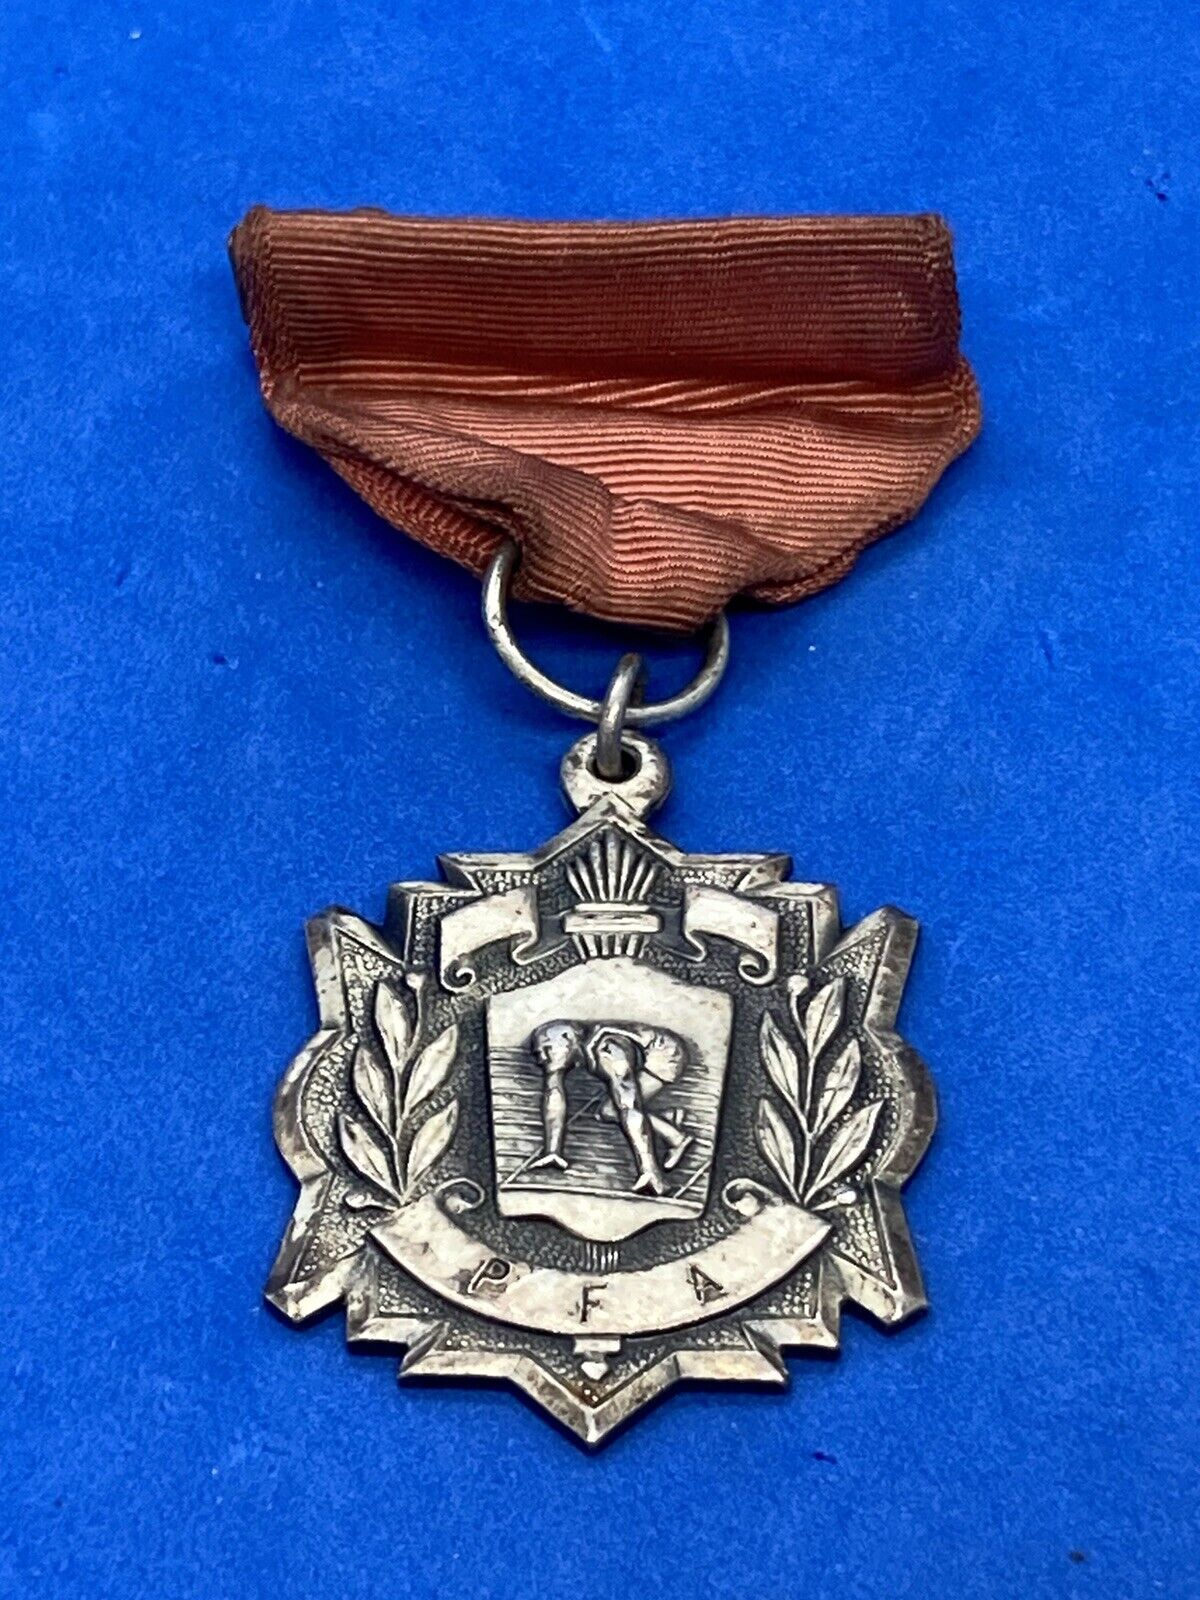 Rare 1964 Chicago 100m Track And Field Medal “PFA” Winner All City Medallion 6